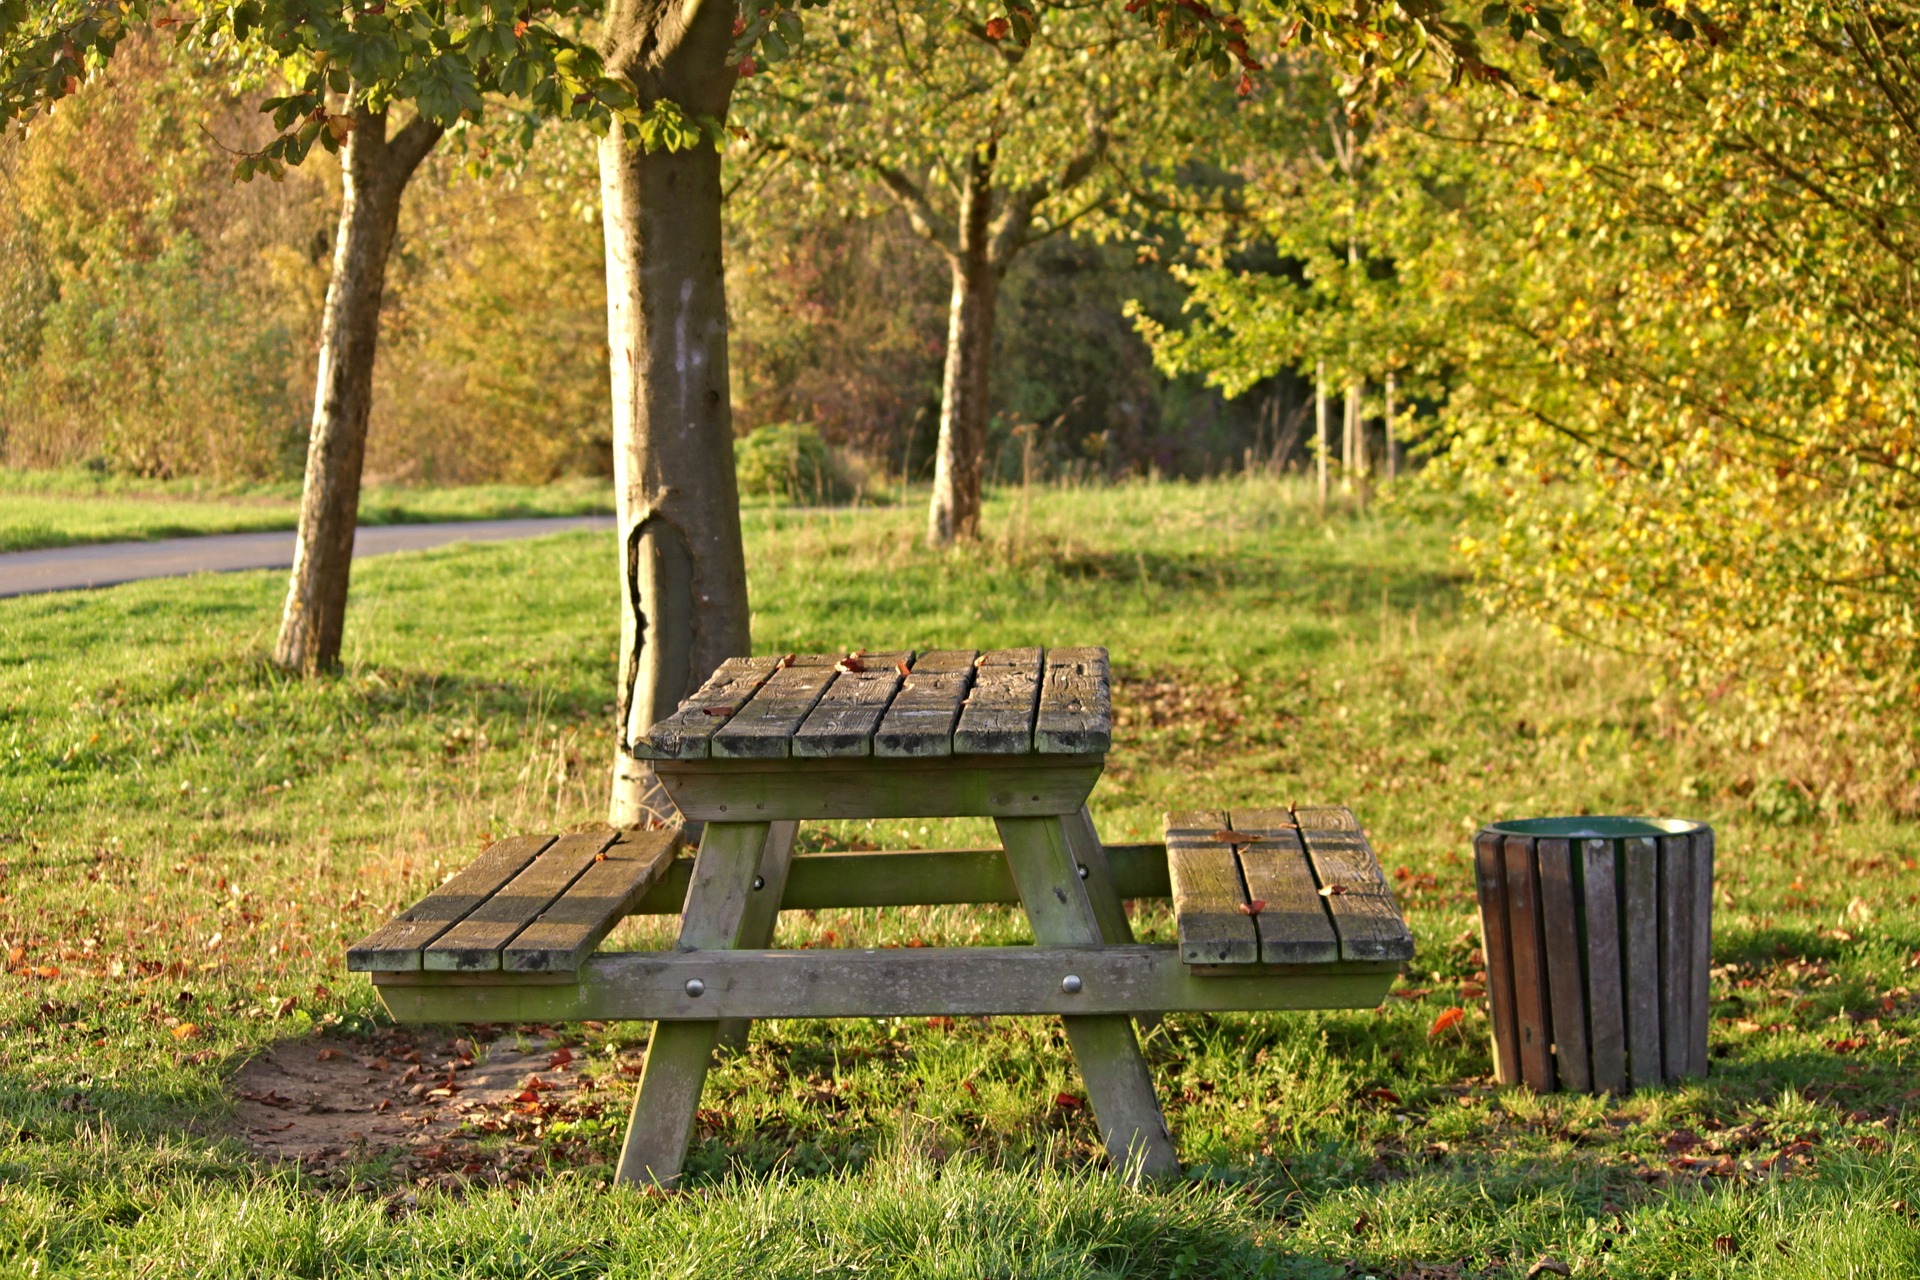 A picnic table